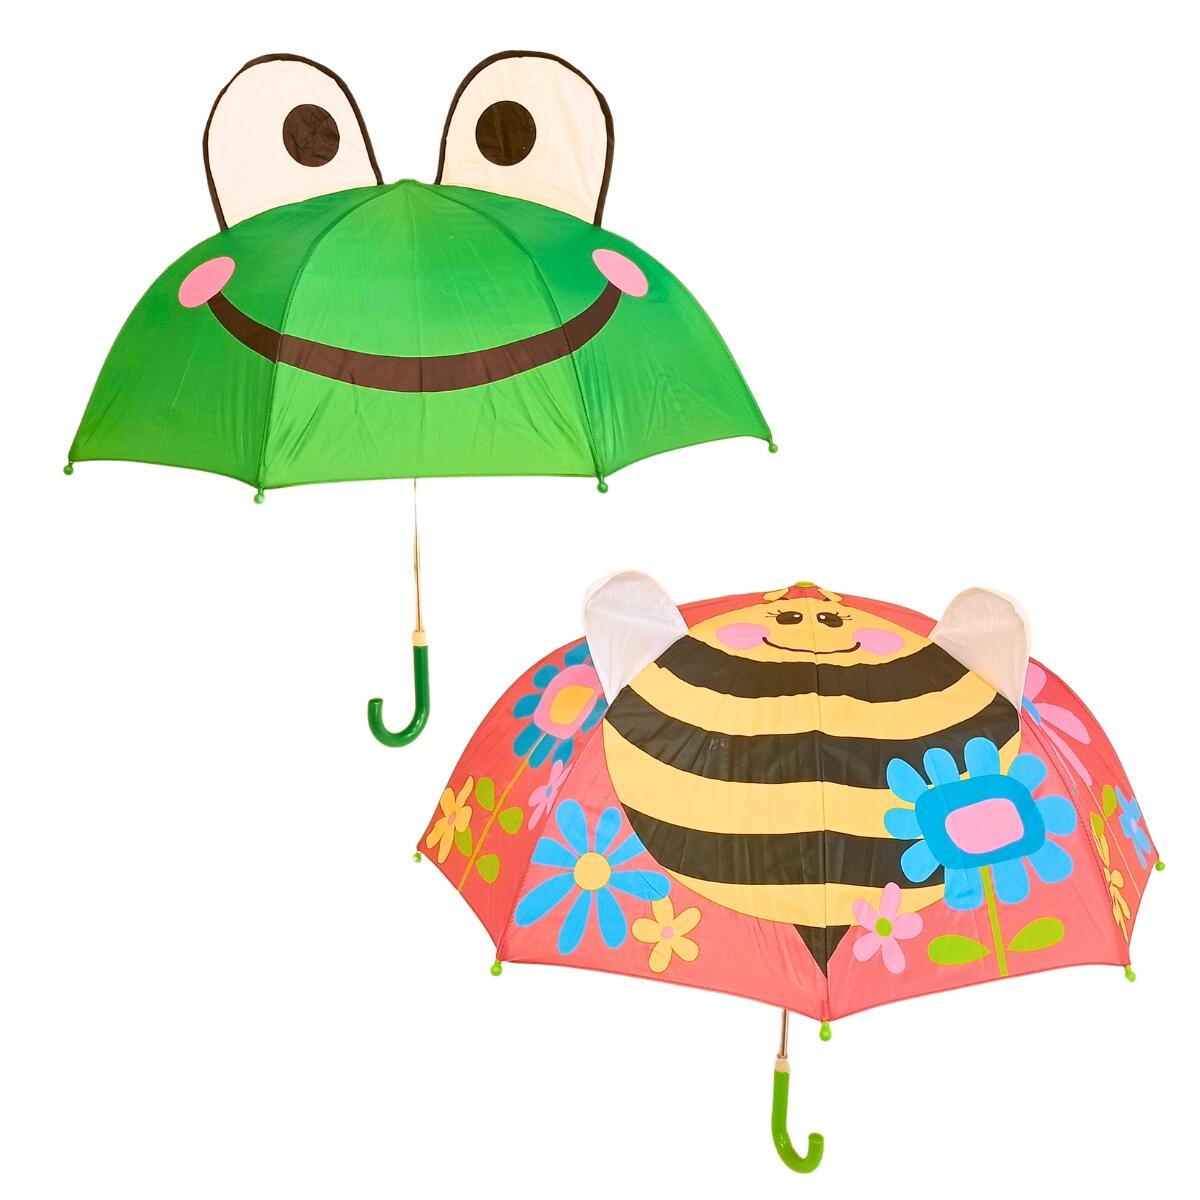 Paraguas infantil estampado